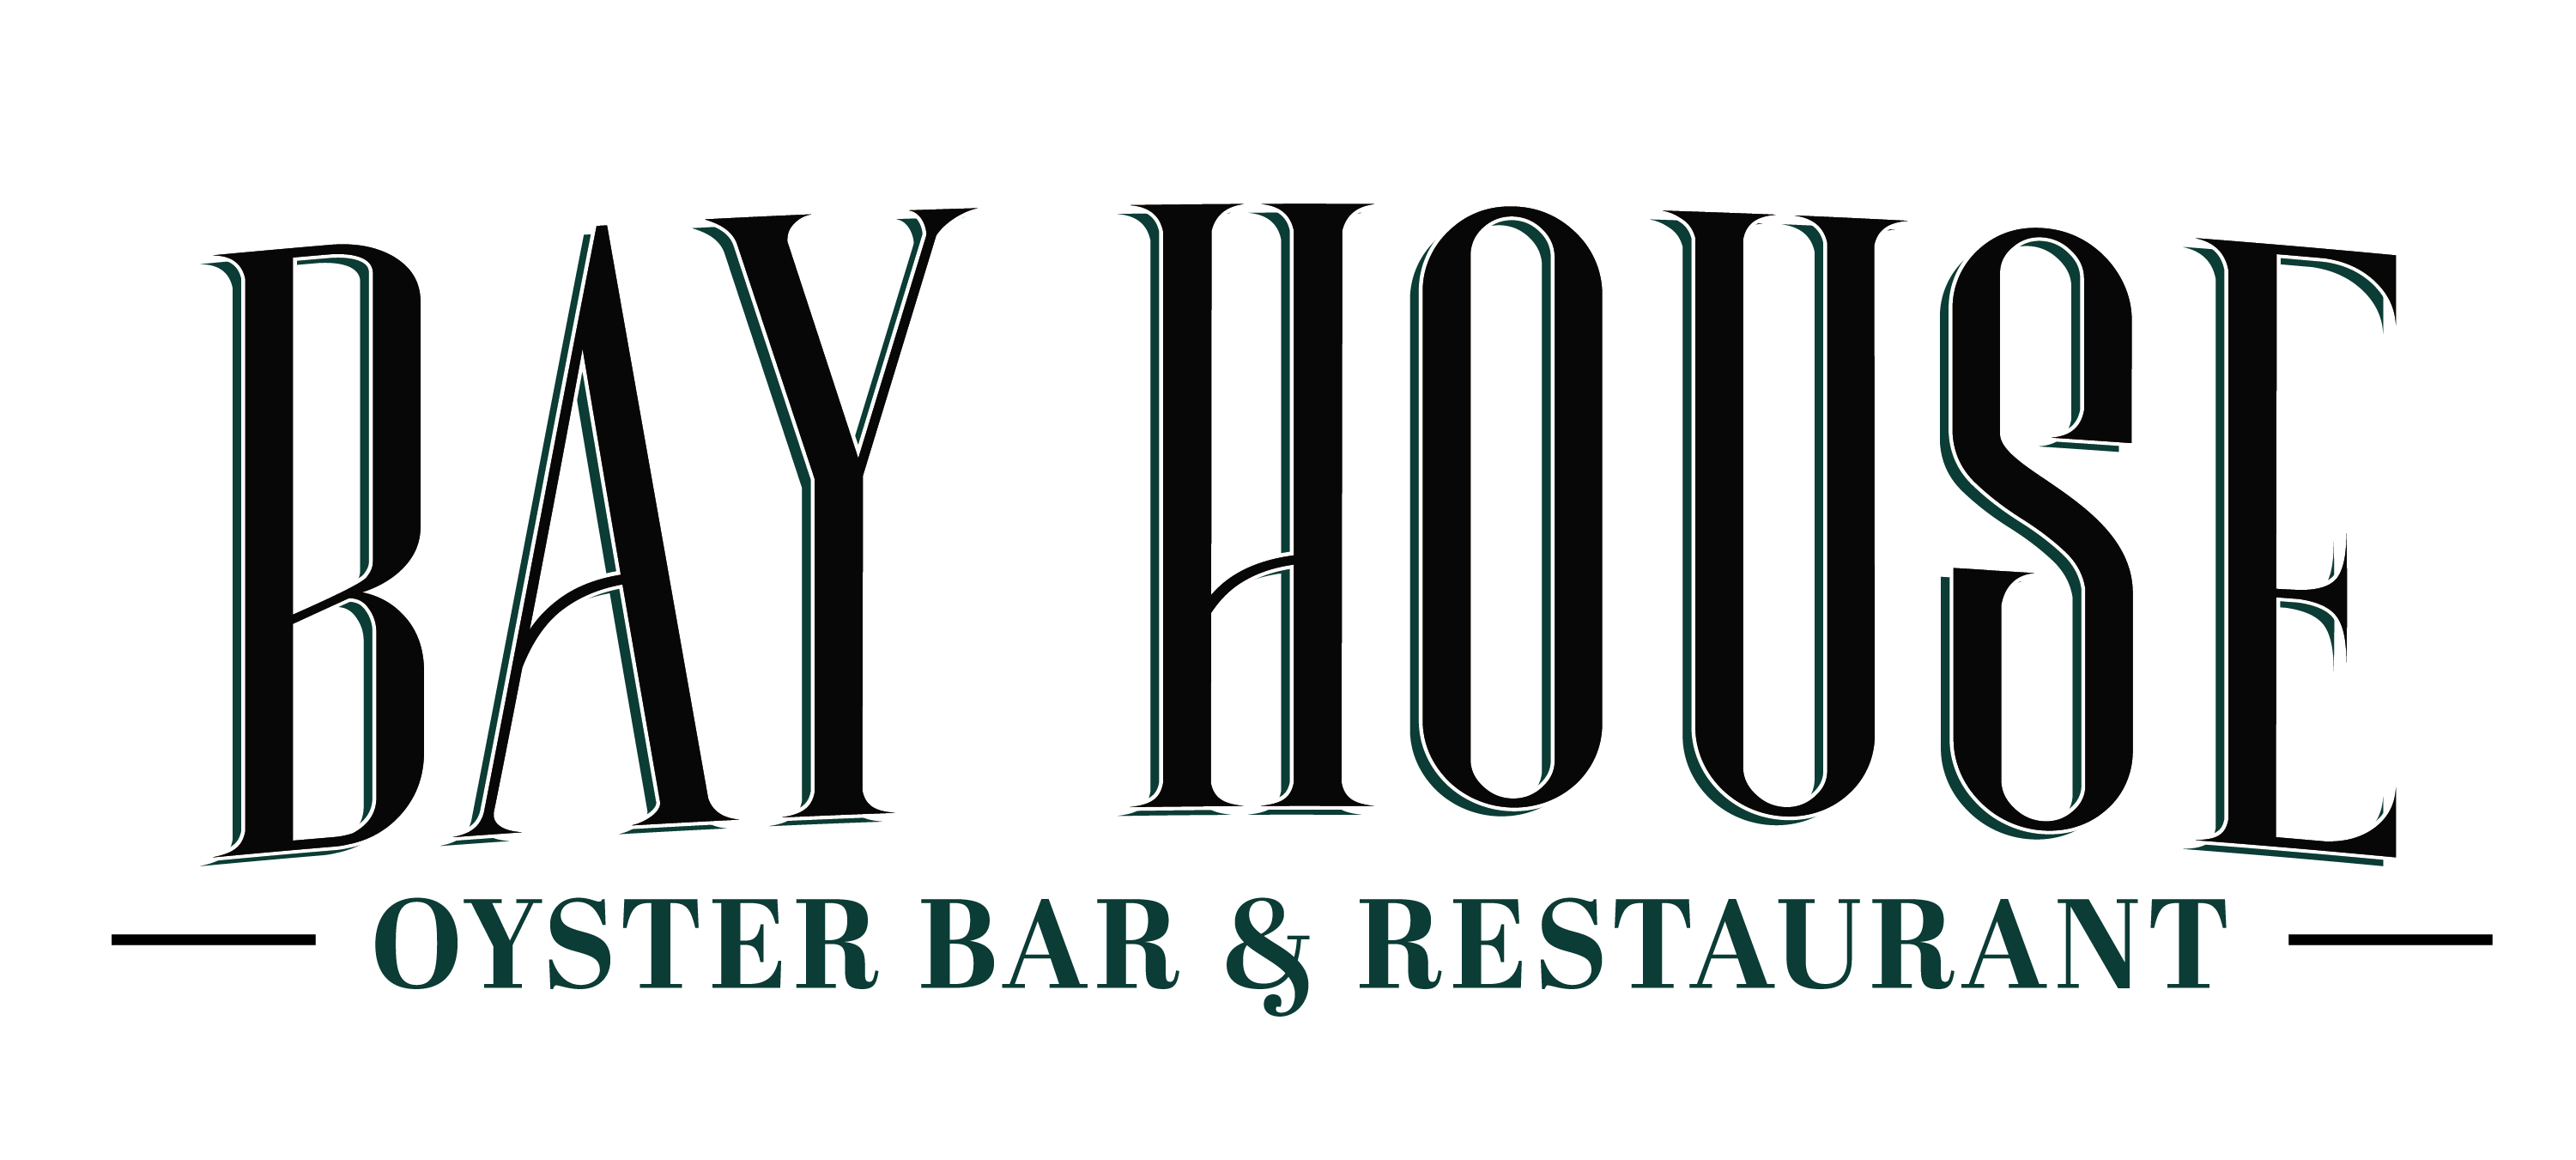 Bay House Oyster Bar Restaurant logo hr